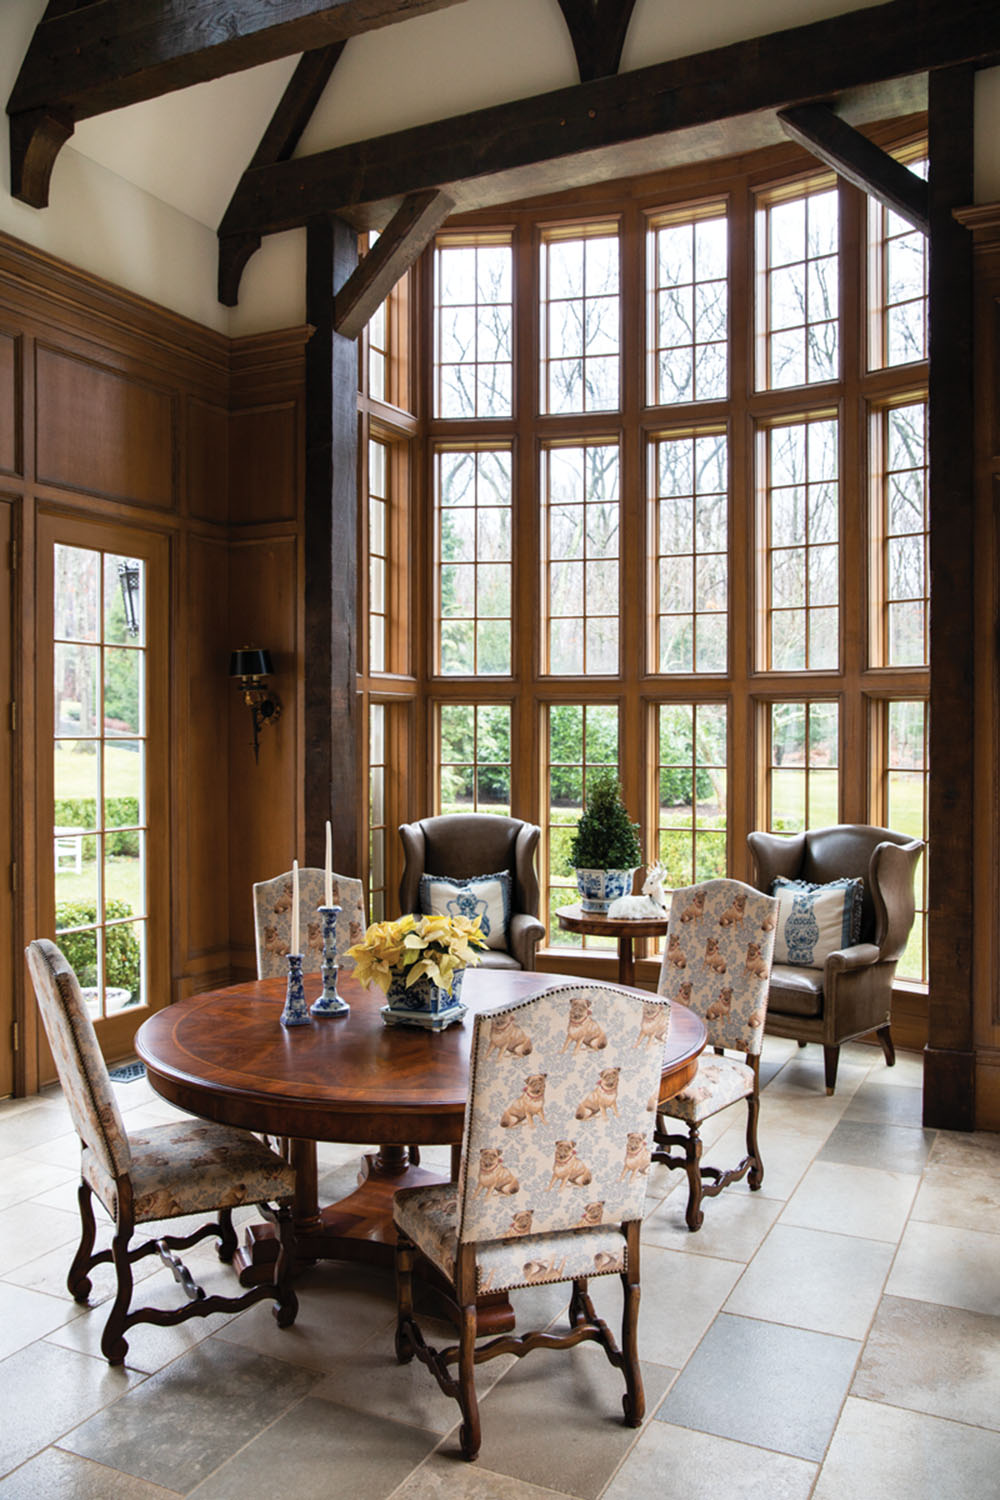 The Enchanted Home, breakfast room decor, wood paneling, bay window